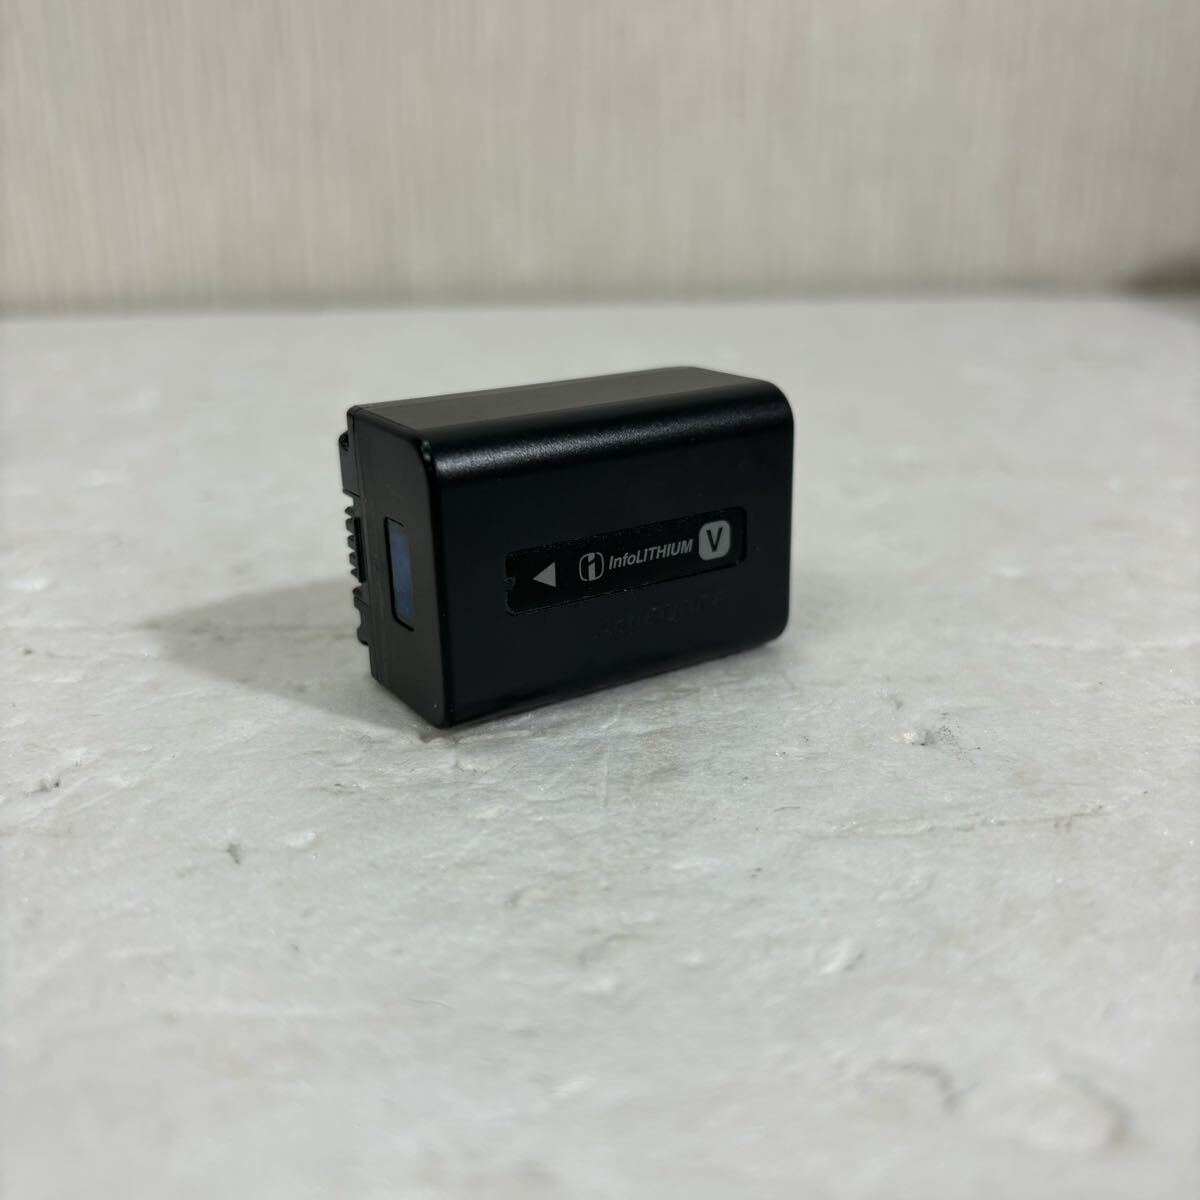 [K2930]1 иен старт!SONY HANDYCAM HDR-CX680 Sony Handycam белый аккумулятор есть цифровая видео камера видео камера 